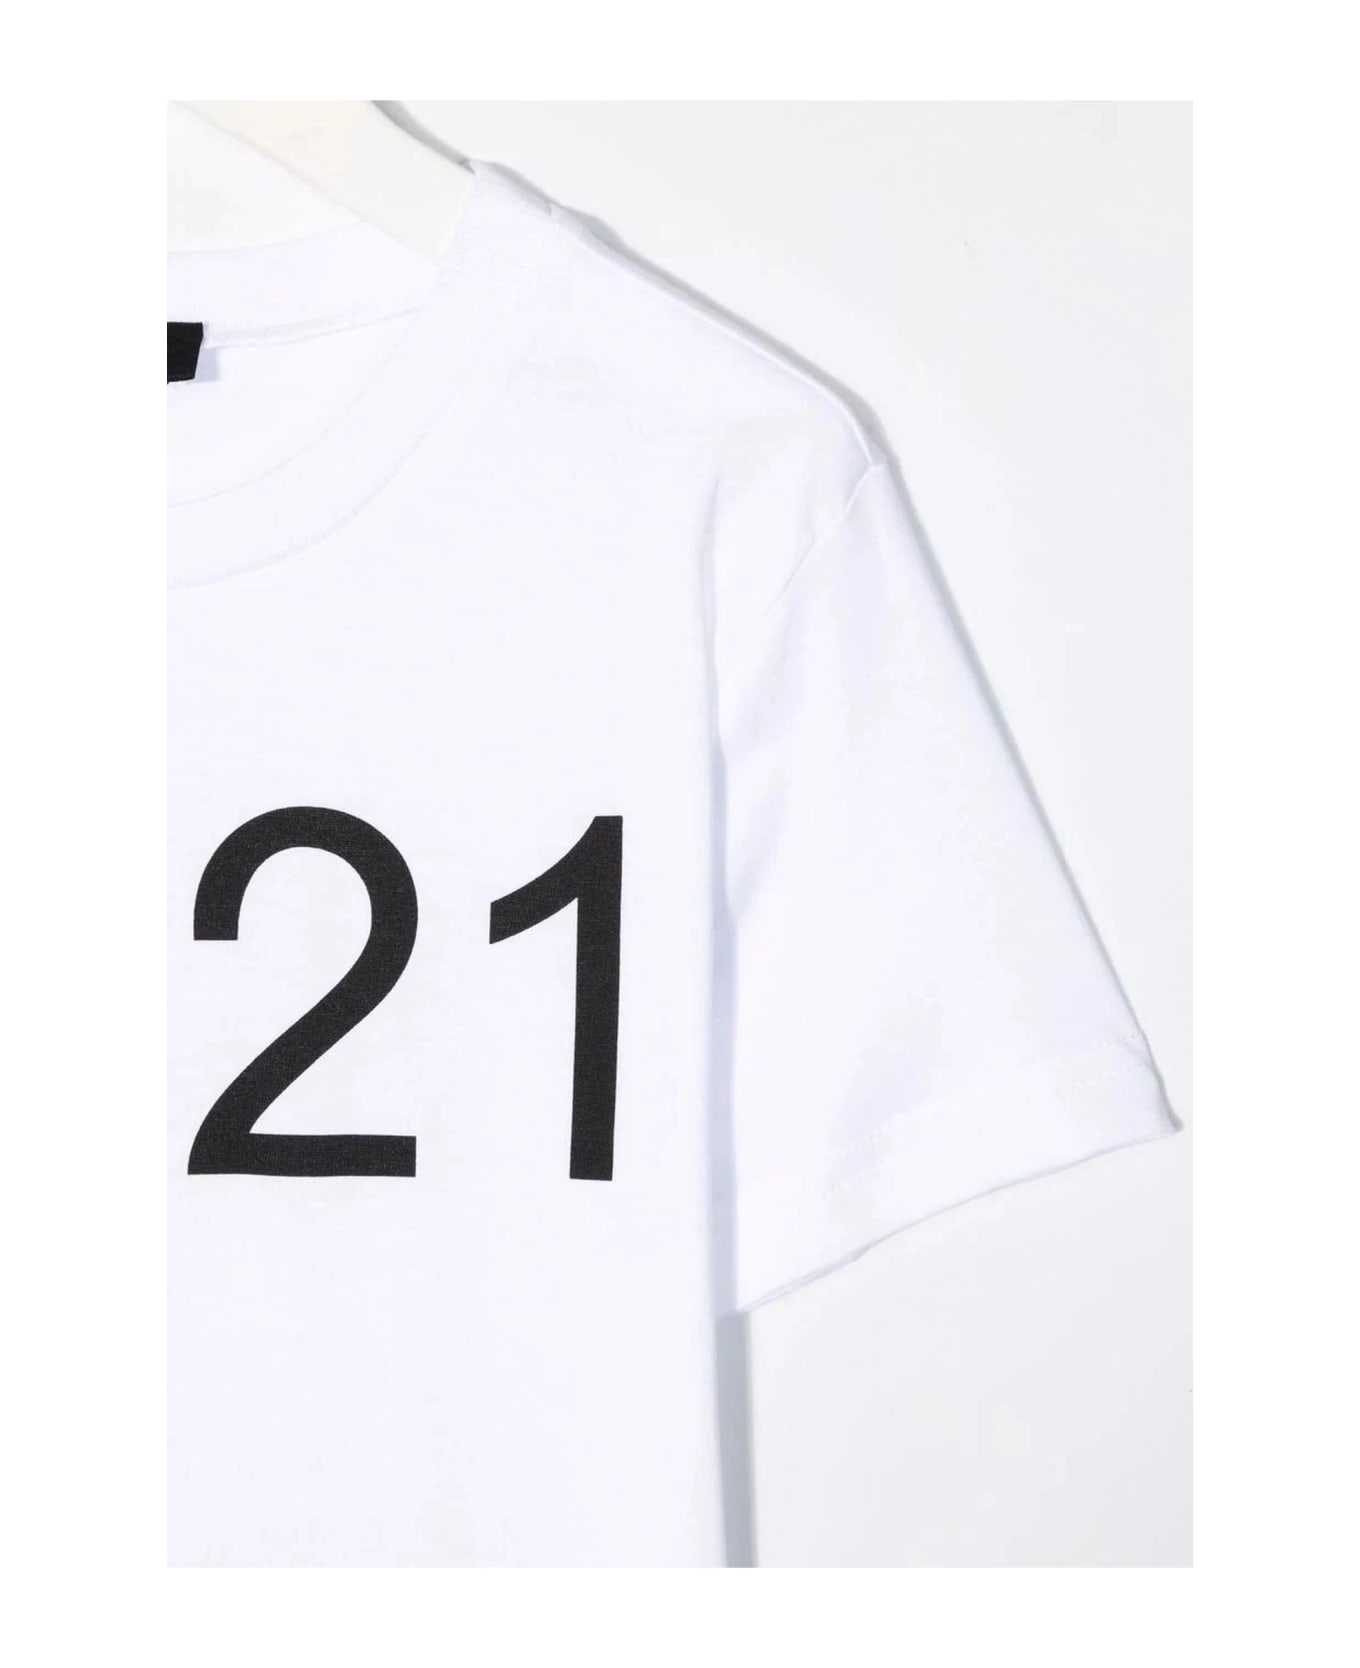 N.21 N°21 T-shirts And Polos White - White